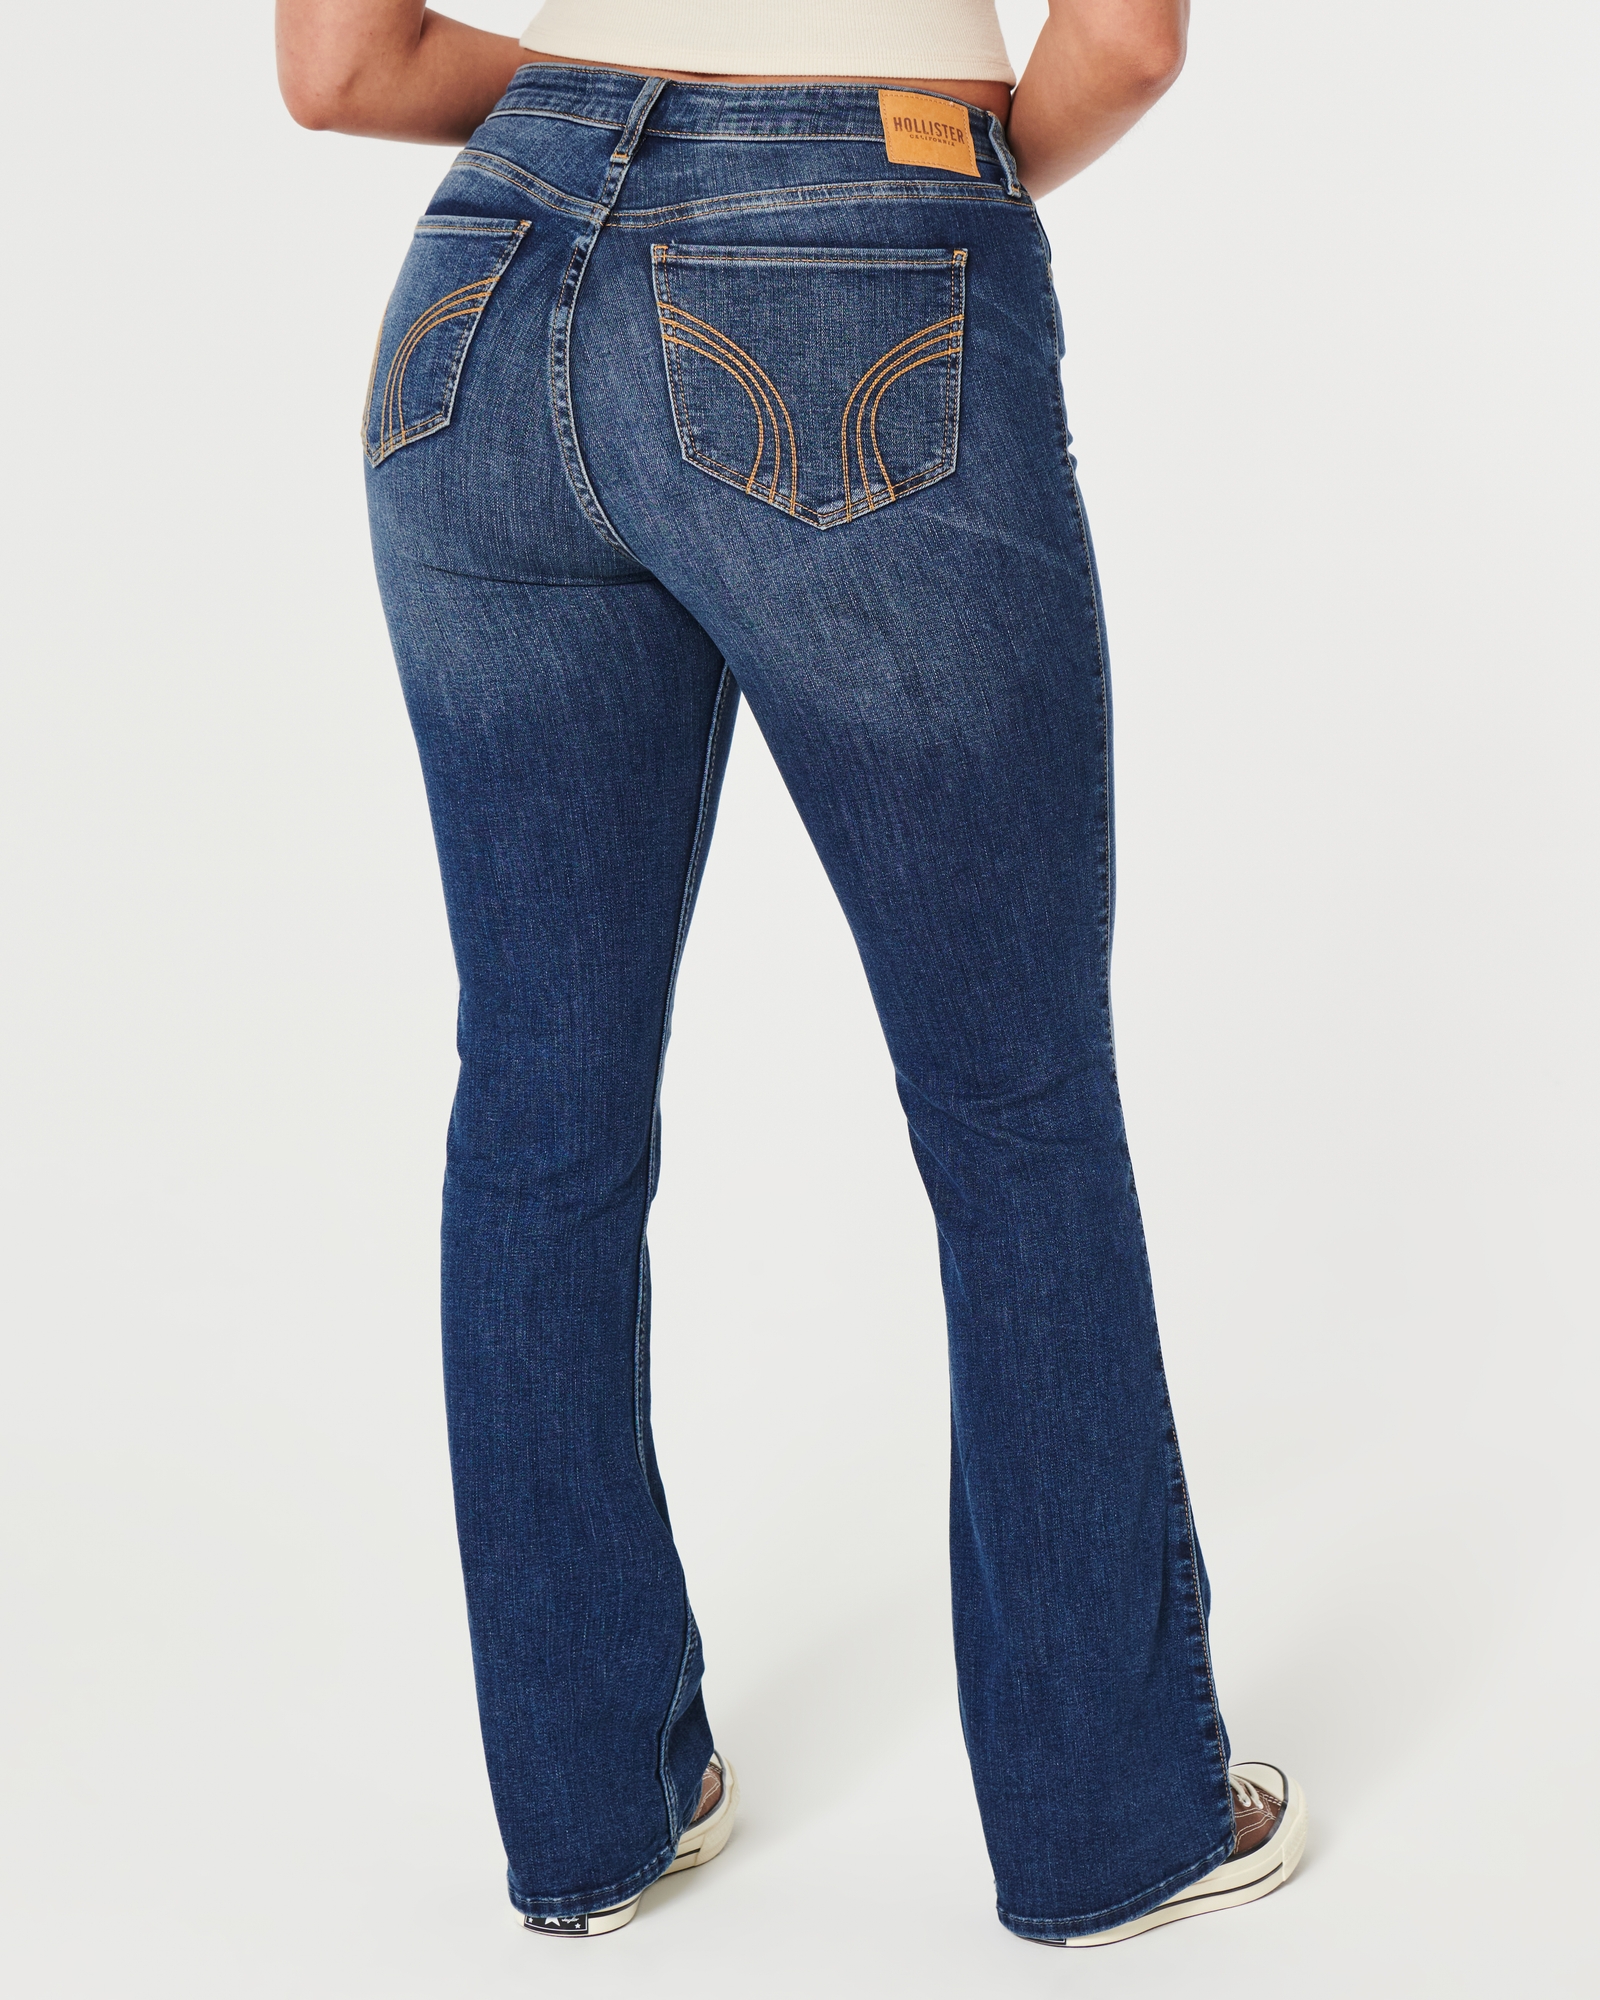 Women's Curvy Mid-Rise Dark Wash Boot Jeans